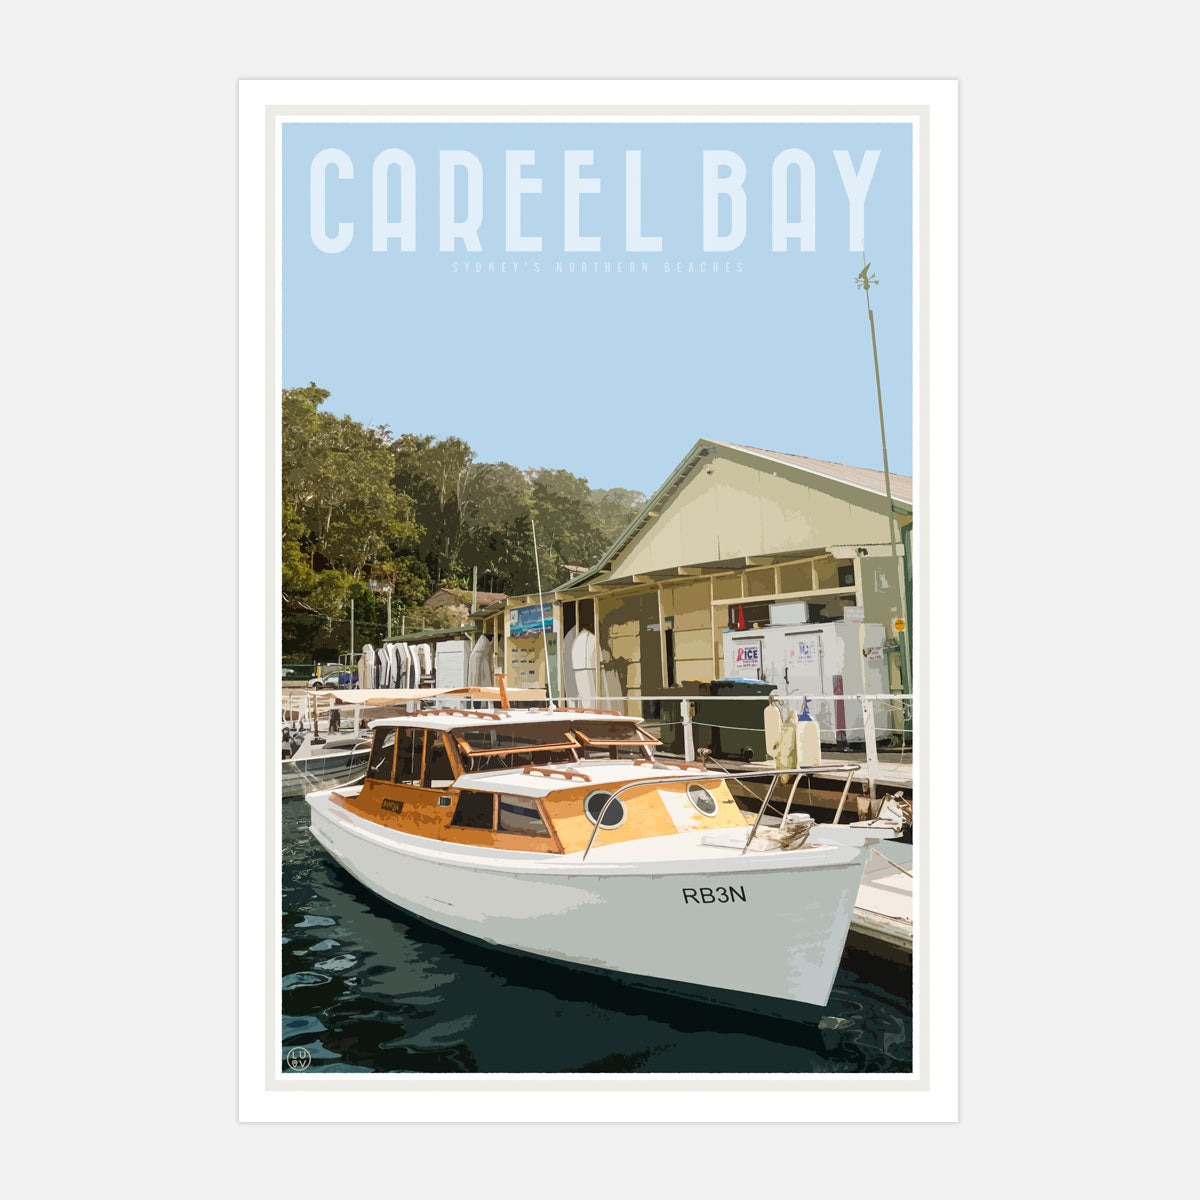 Careel Bay print and poster. Vintage travel style original design